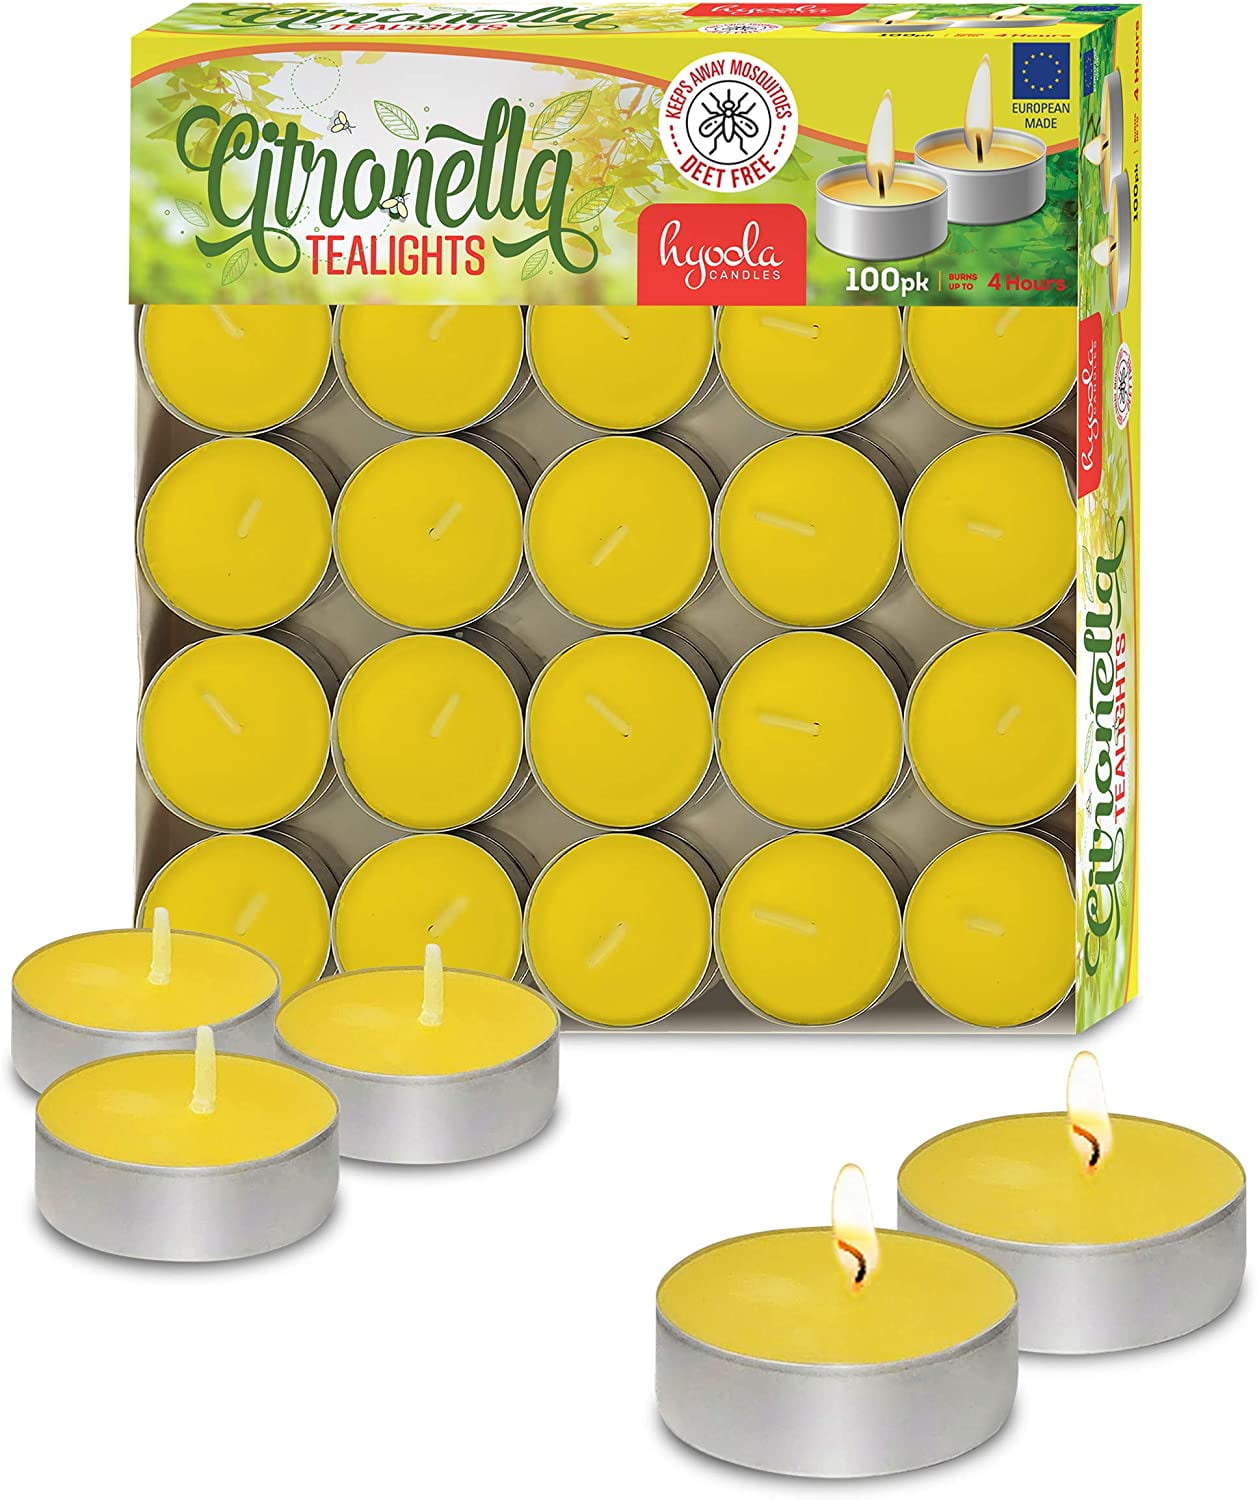 25 Pack Citronella Tea Light Candles 